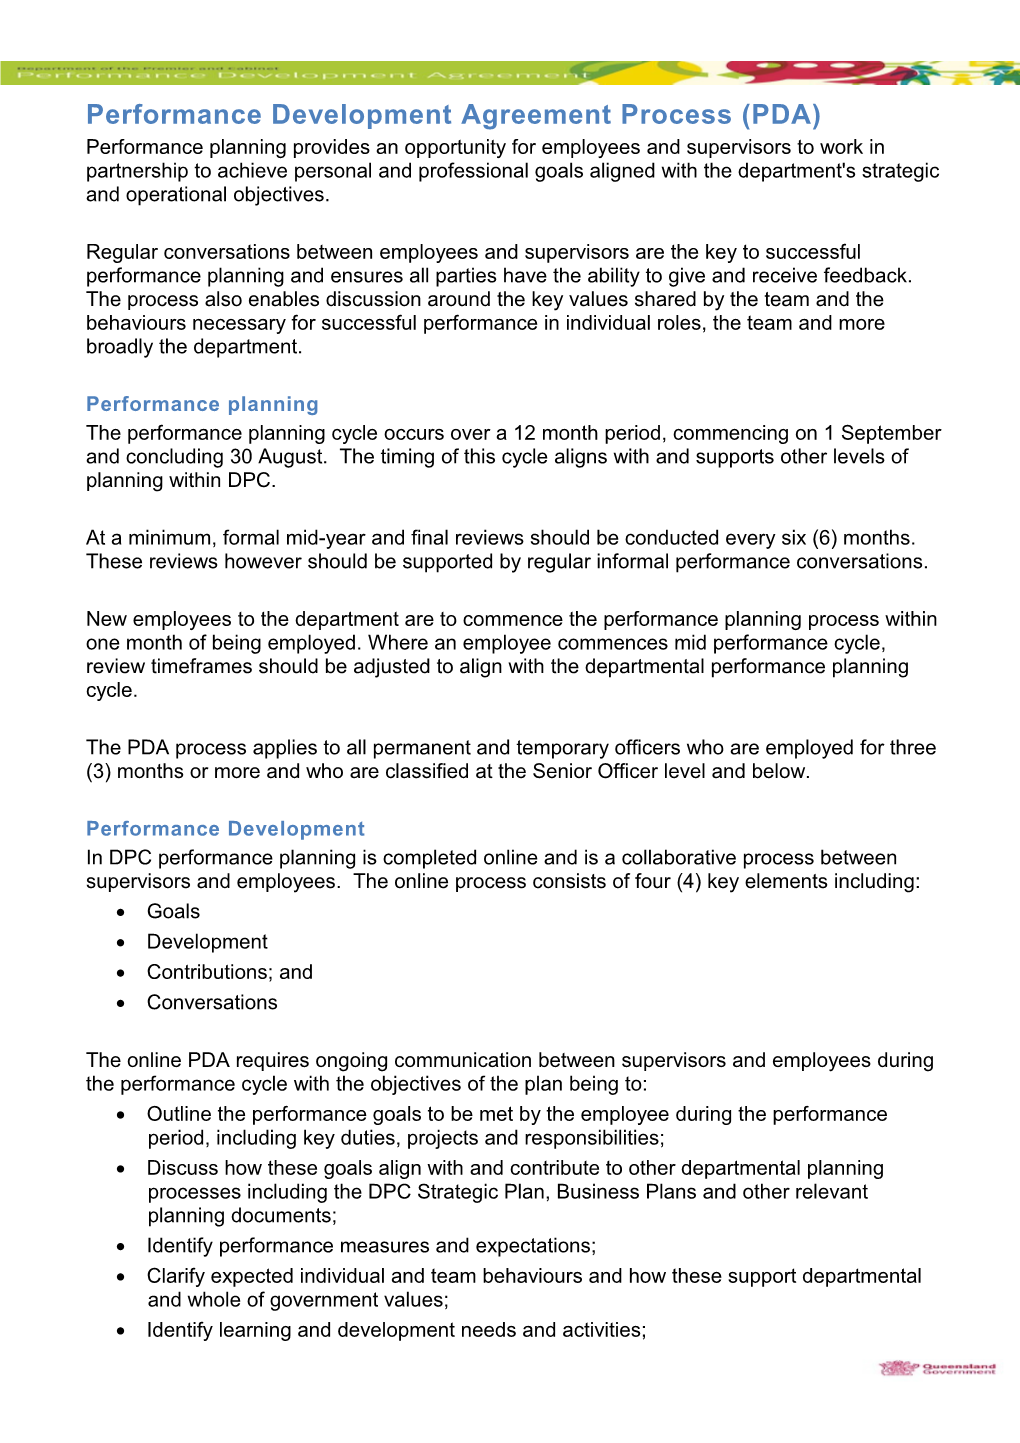 Performance Development Agreementprocess (PDA)